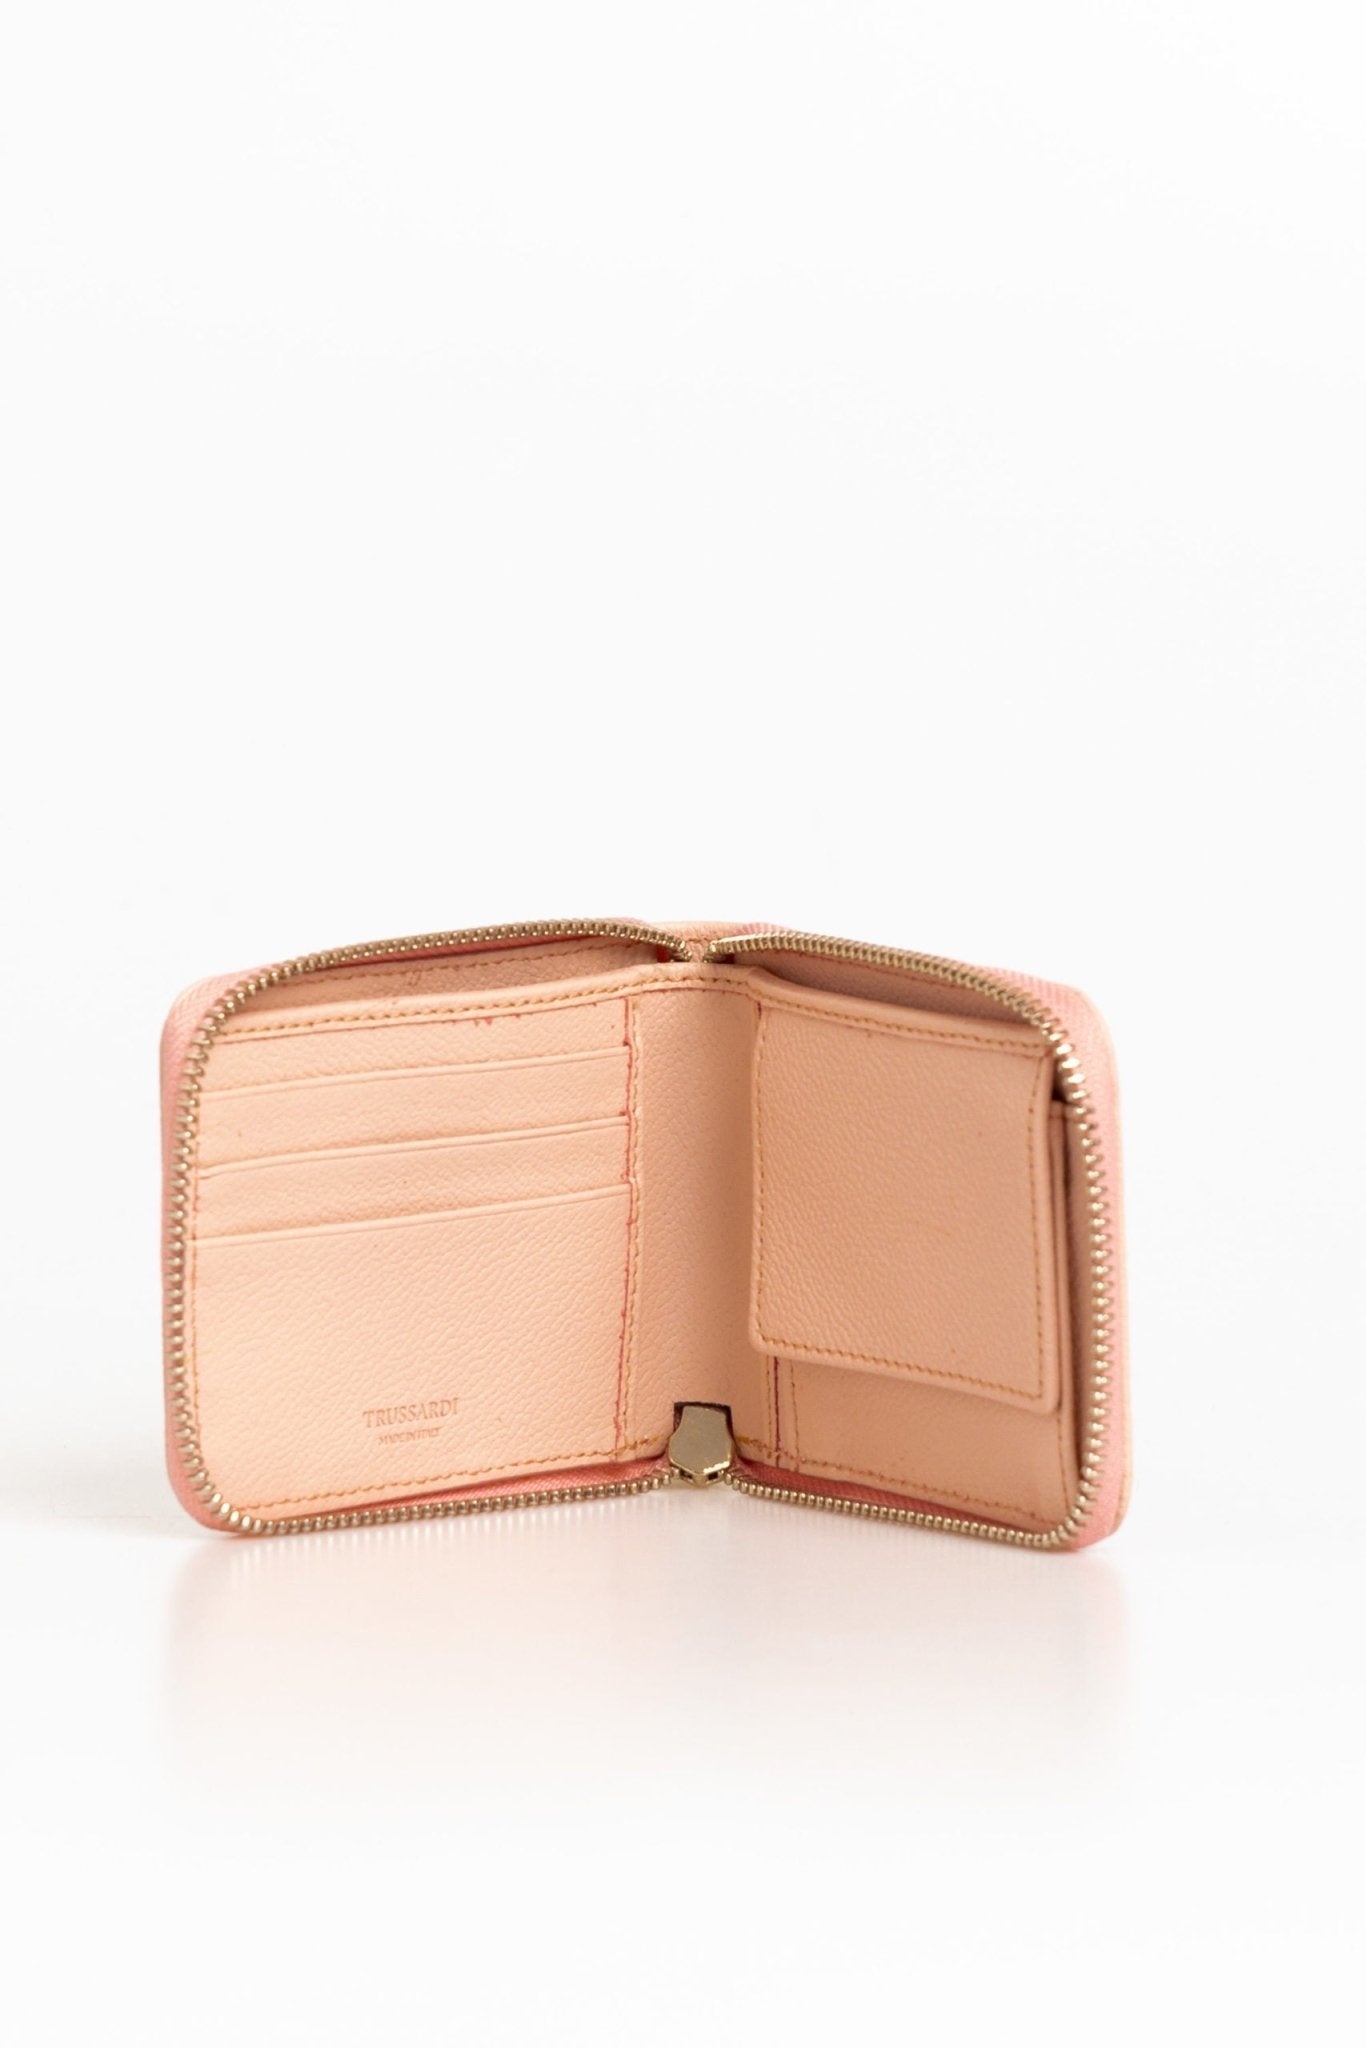 Trussardi Pink Leather Wallet - Fizigo